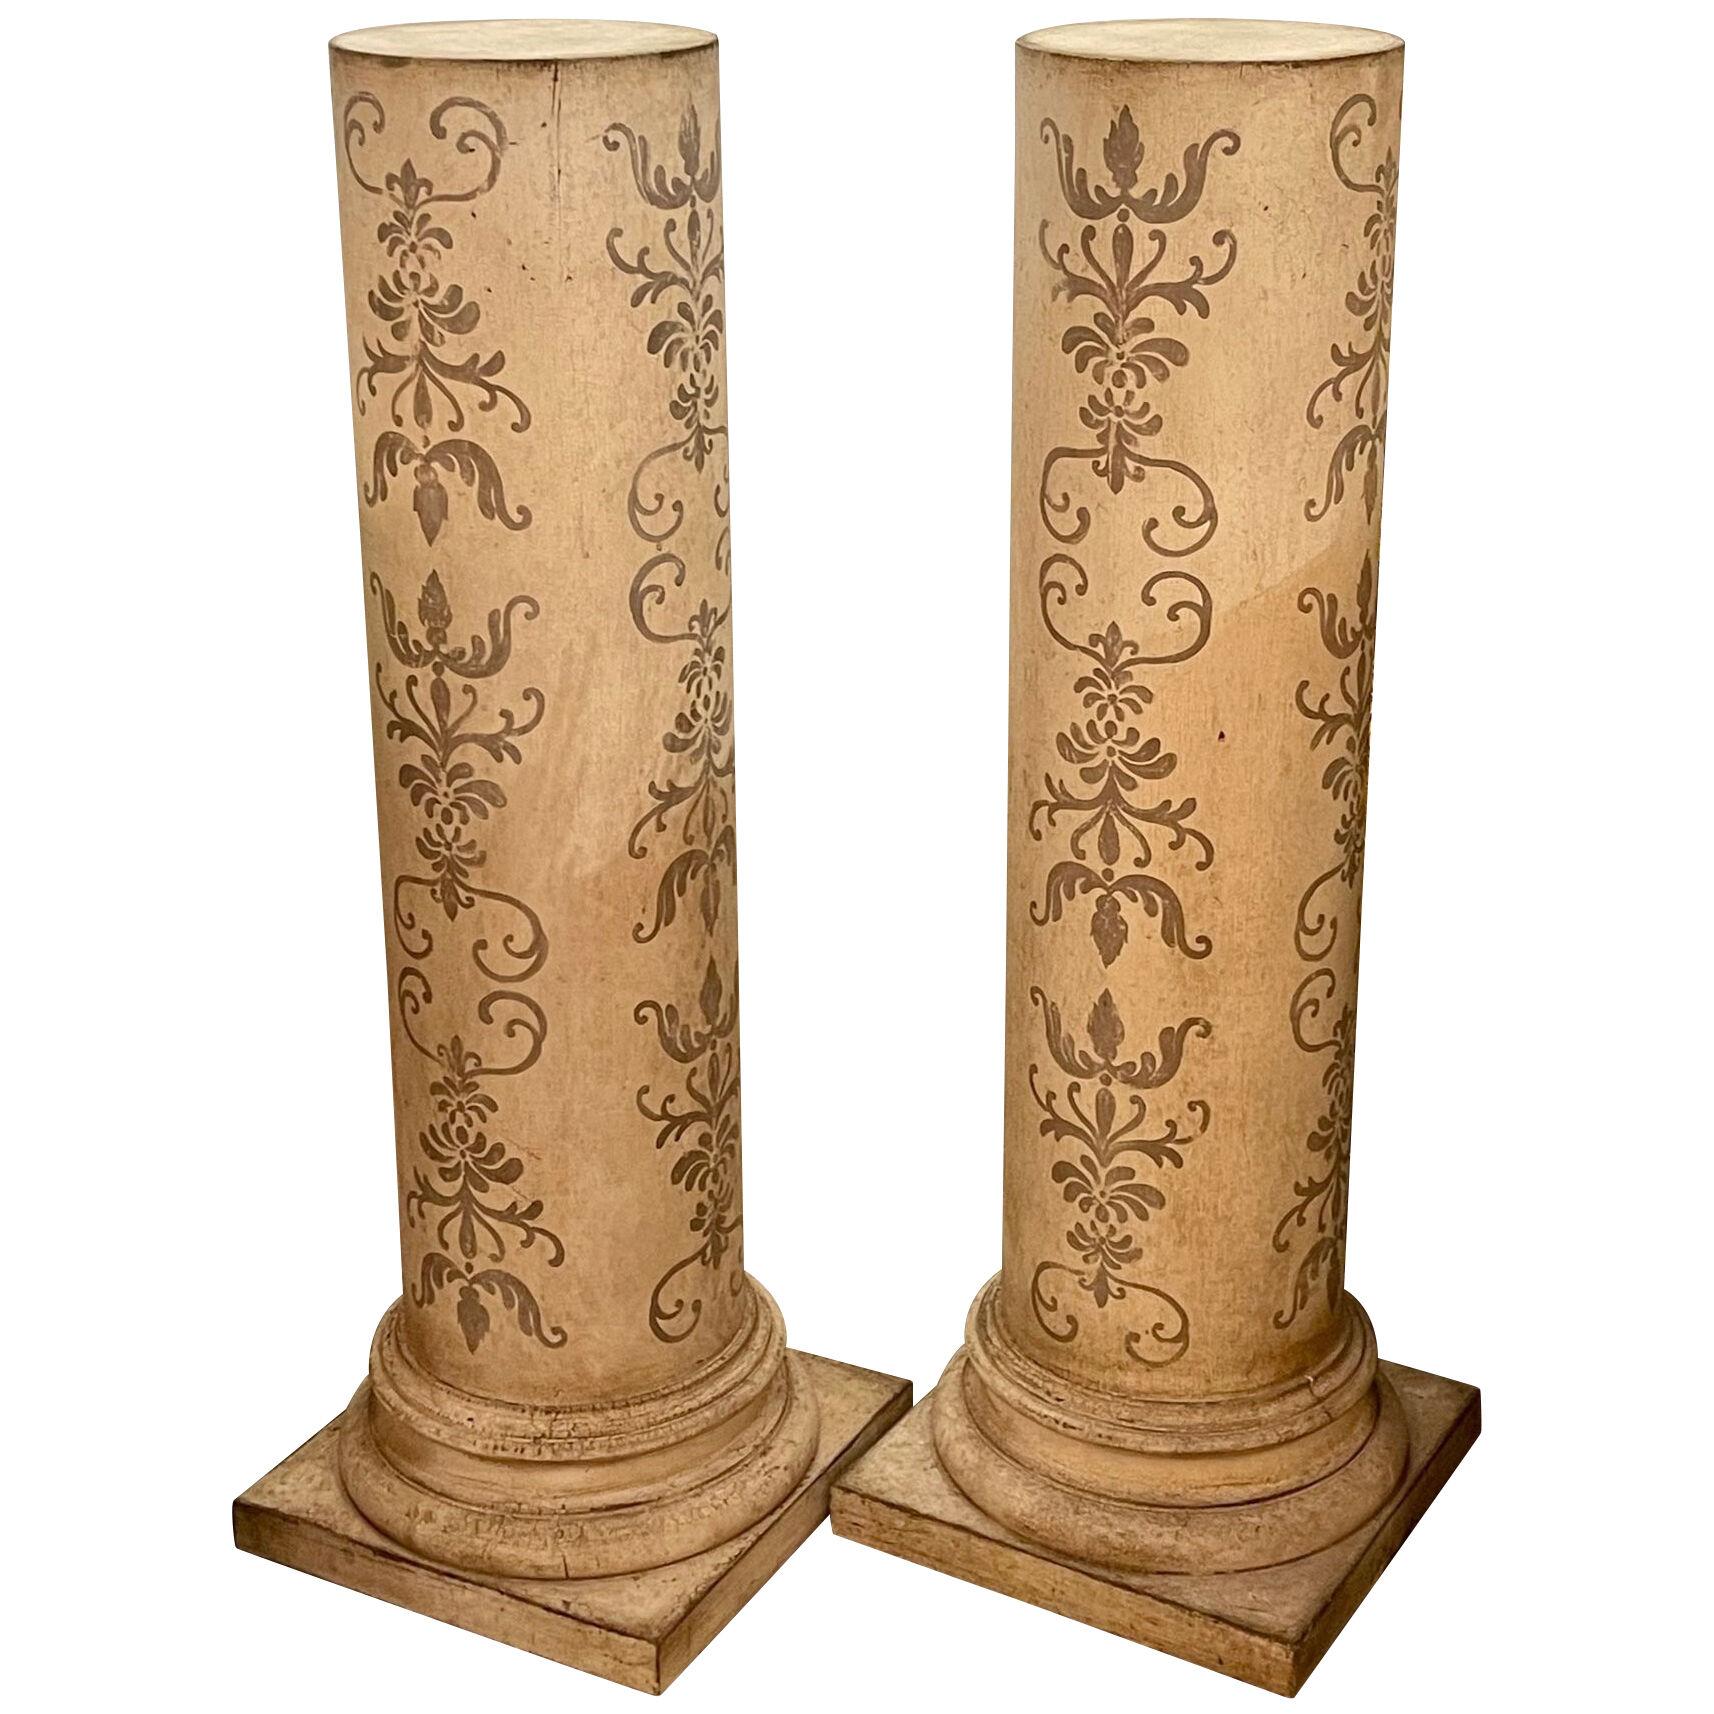 Pair of Italian Painted Wood Pedestals